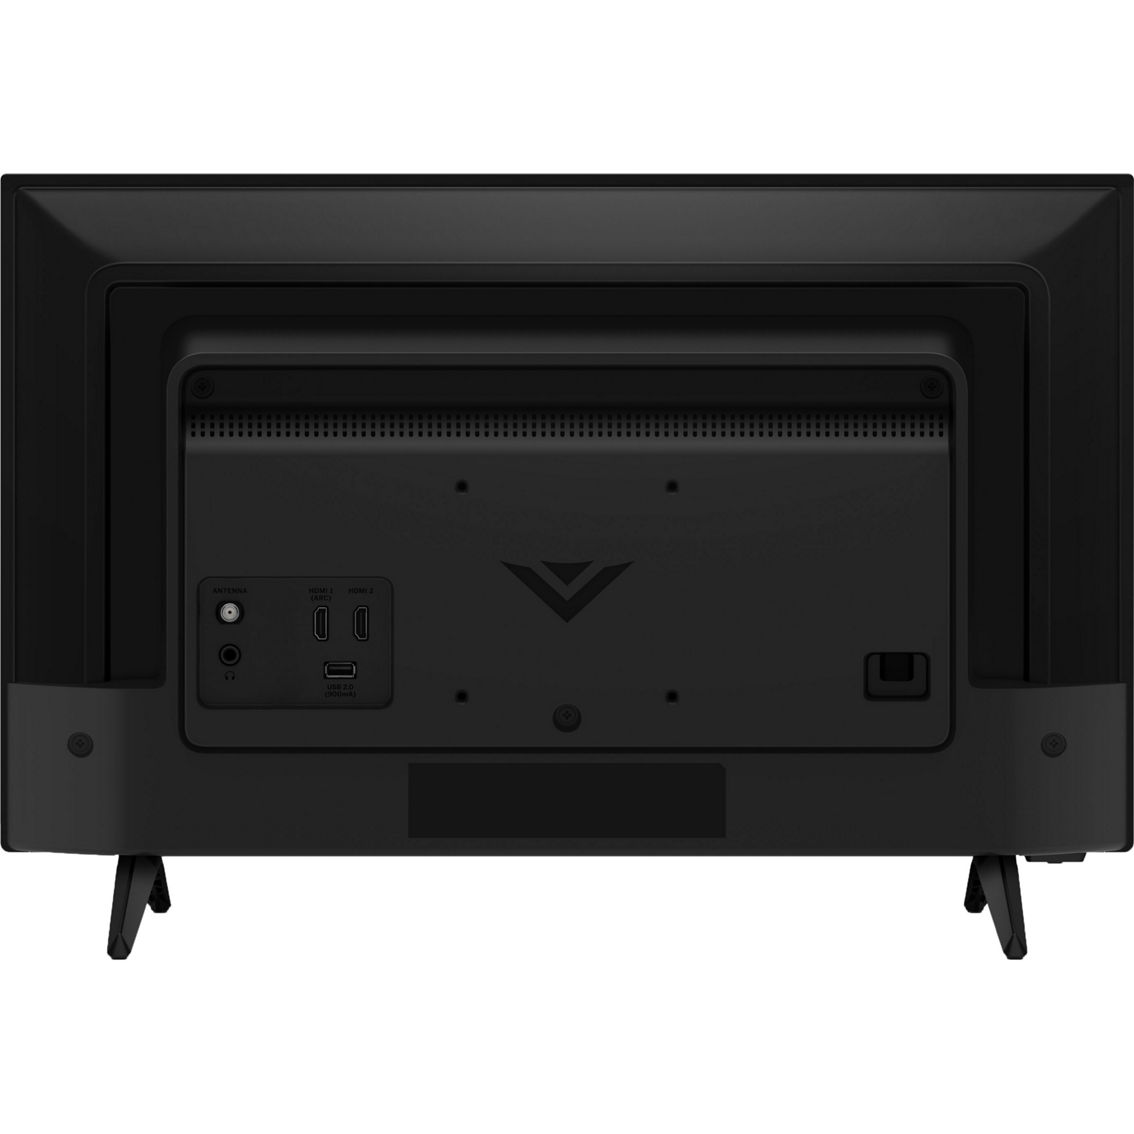 Vizio D-Series 24 in. Class 1080P Full HD AMD FreeSync Smart TV D24fM-K01 - Image 2 of 6